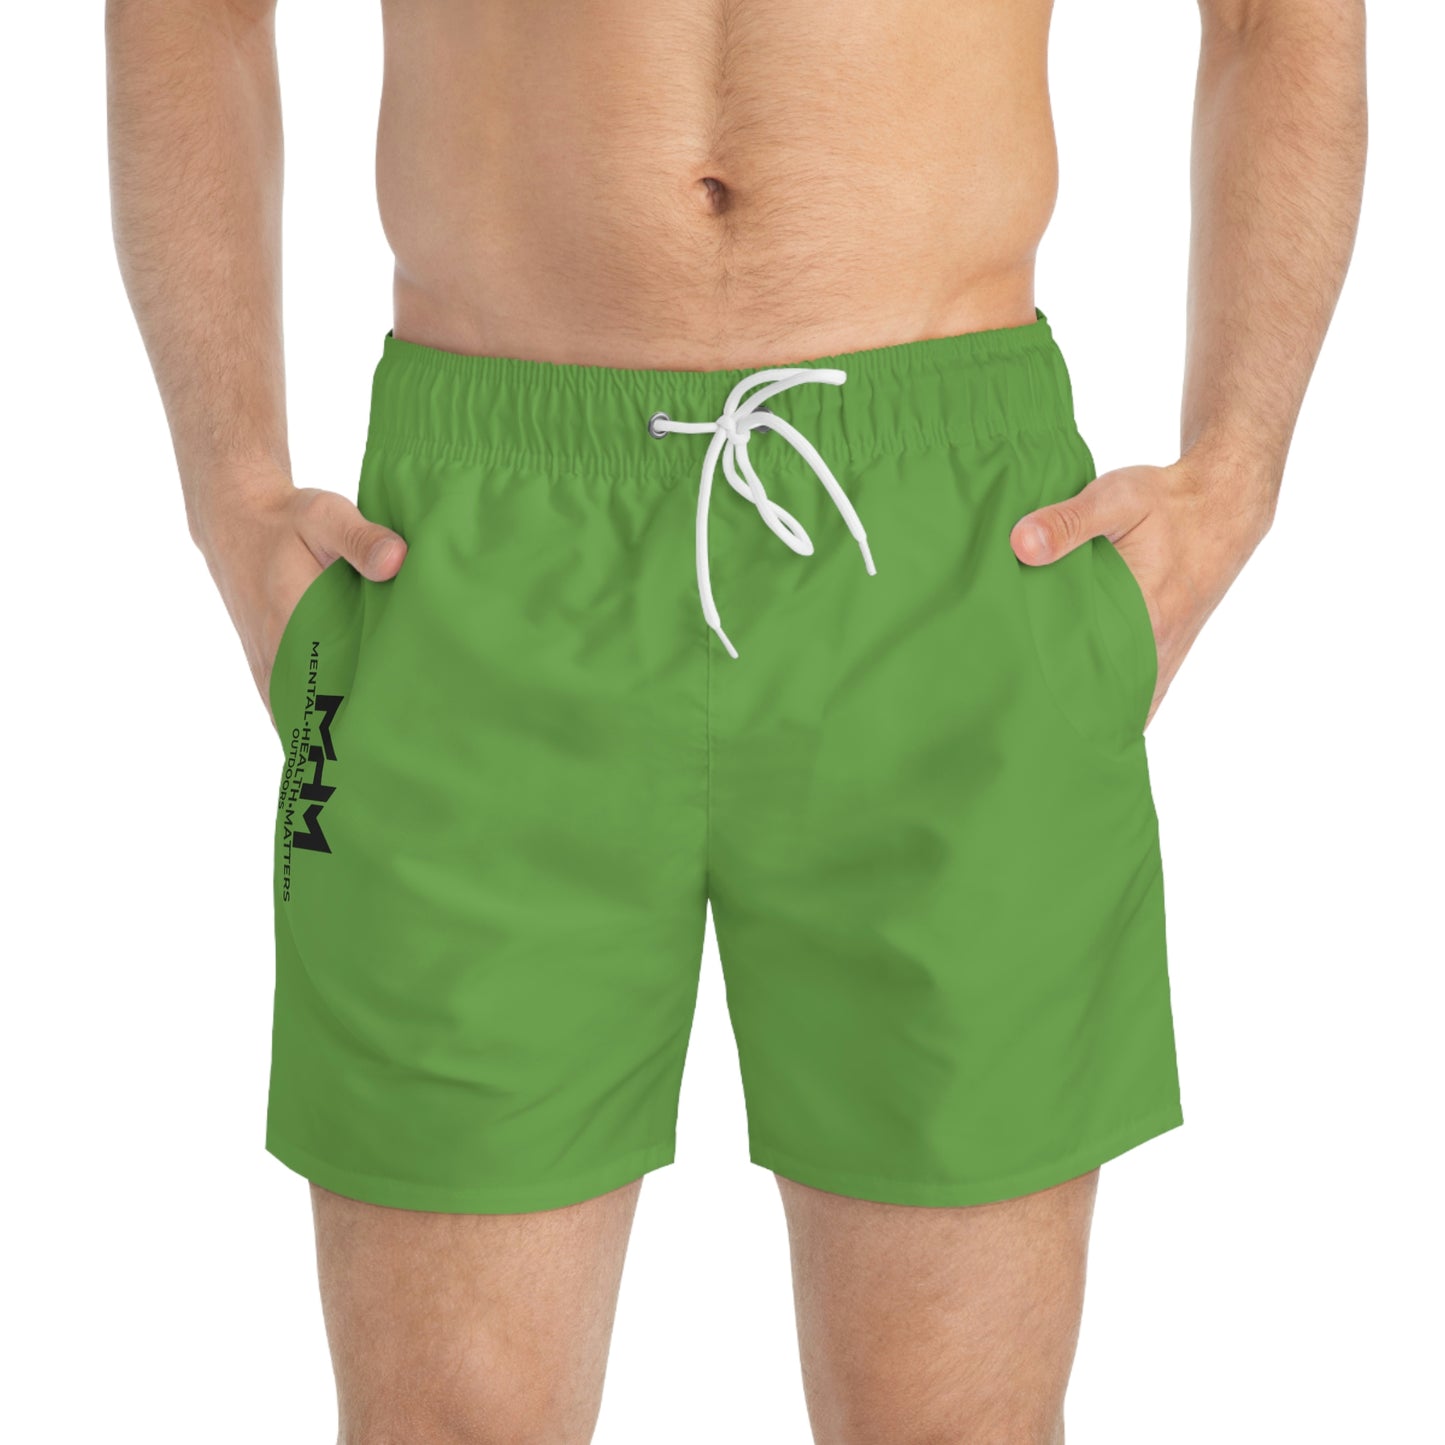 Logo Swim Trunks (Green)(5 Inch Inseam)